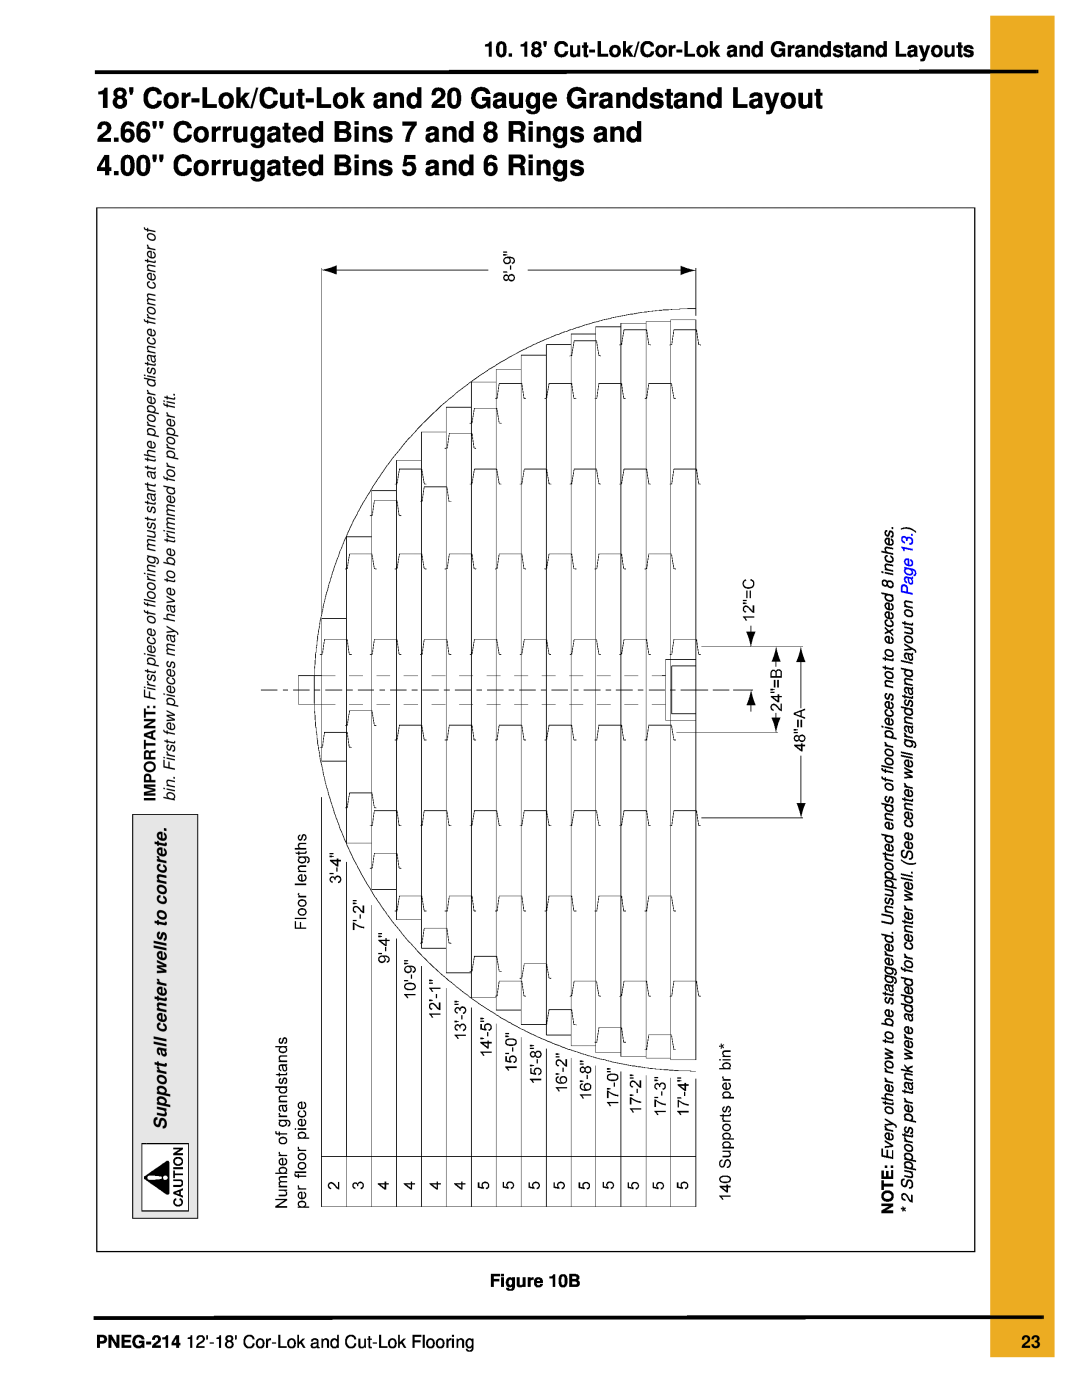 GSI Outdoors PNEG-214 installation manual Corrugated Bins 5 and 6 Rings, 10. 18 Cut-Lok/Cor-Lokand Grandstand Layouts 